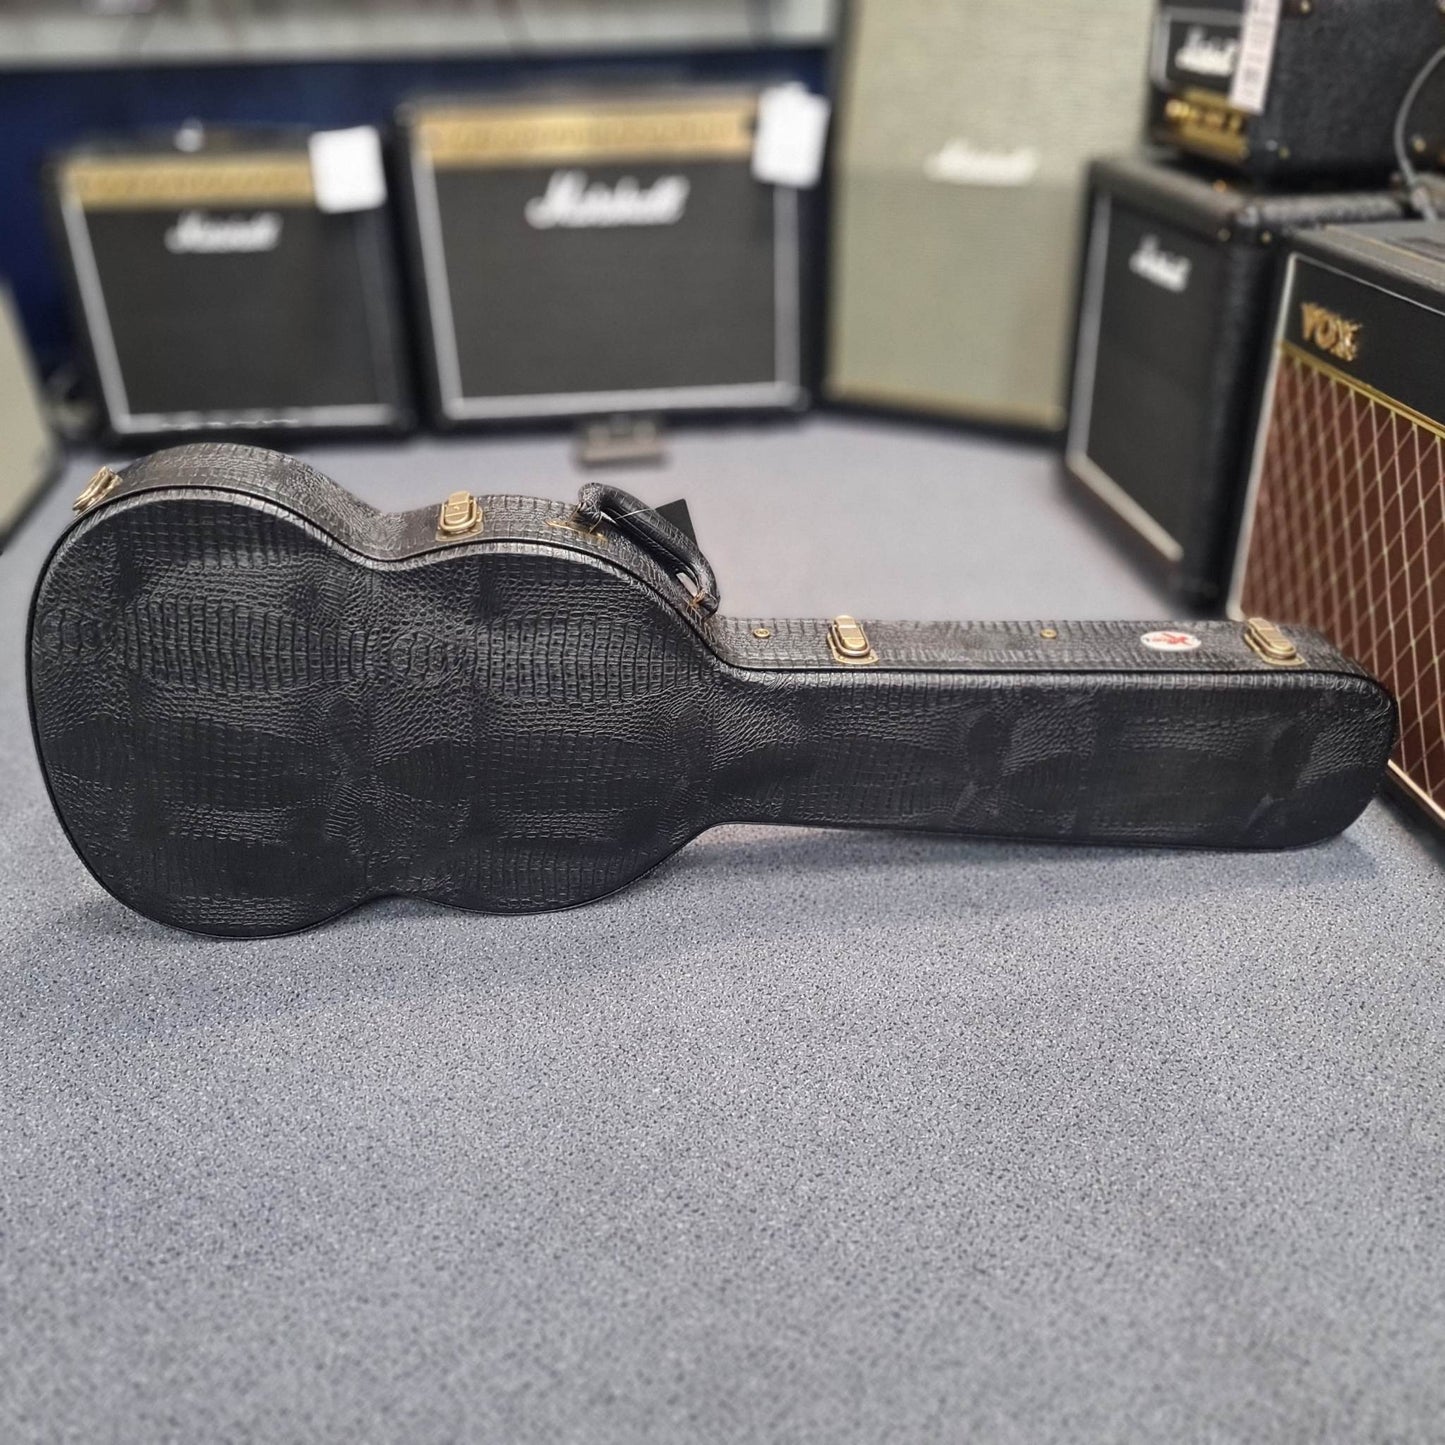 Xtreme Croc Hard Case for SG Shaped Guitars